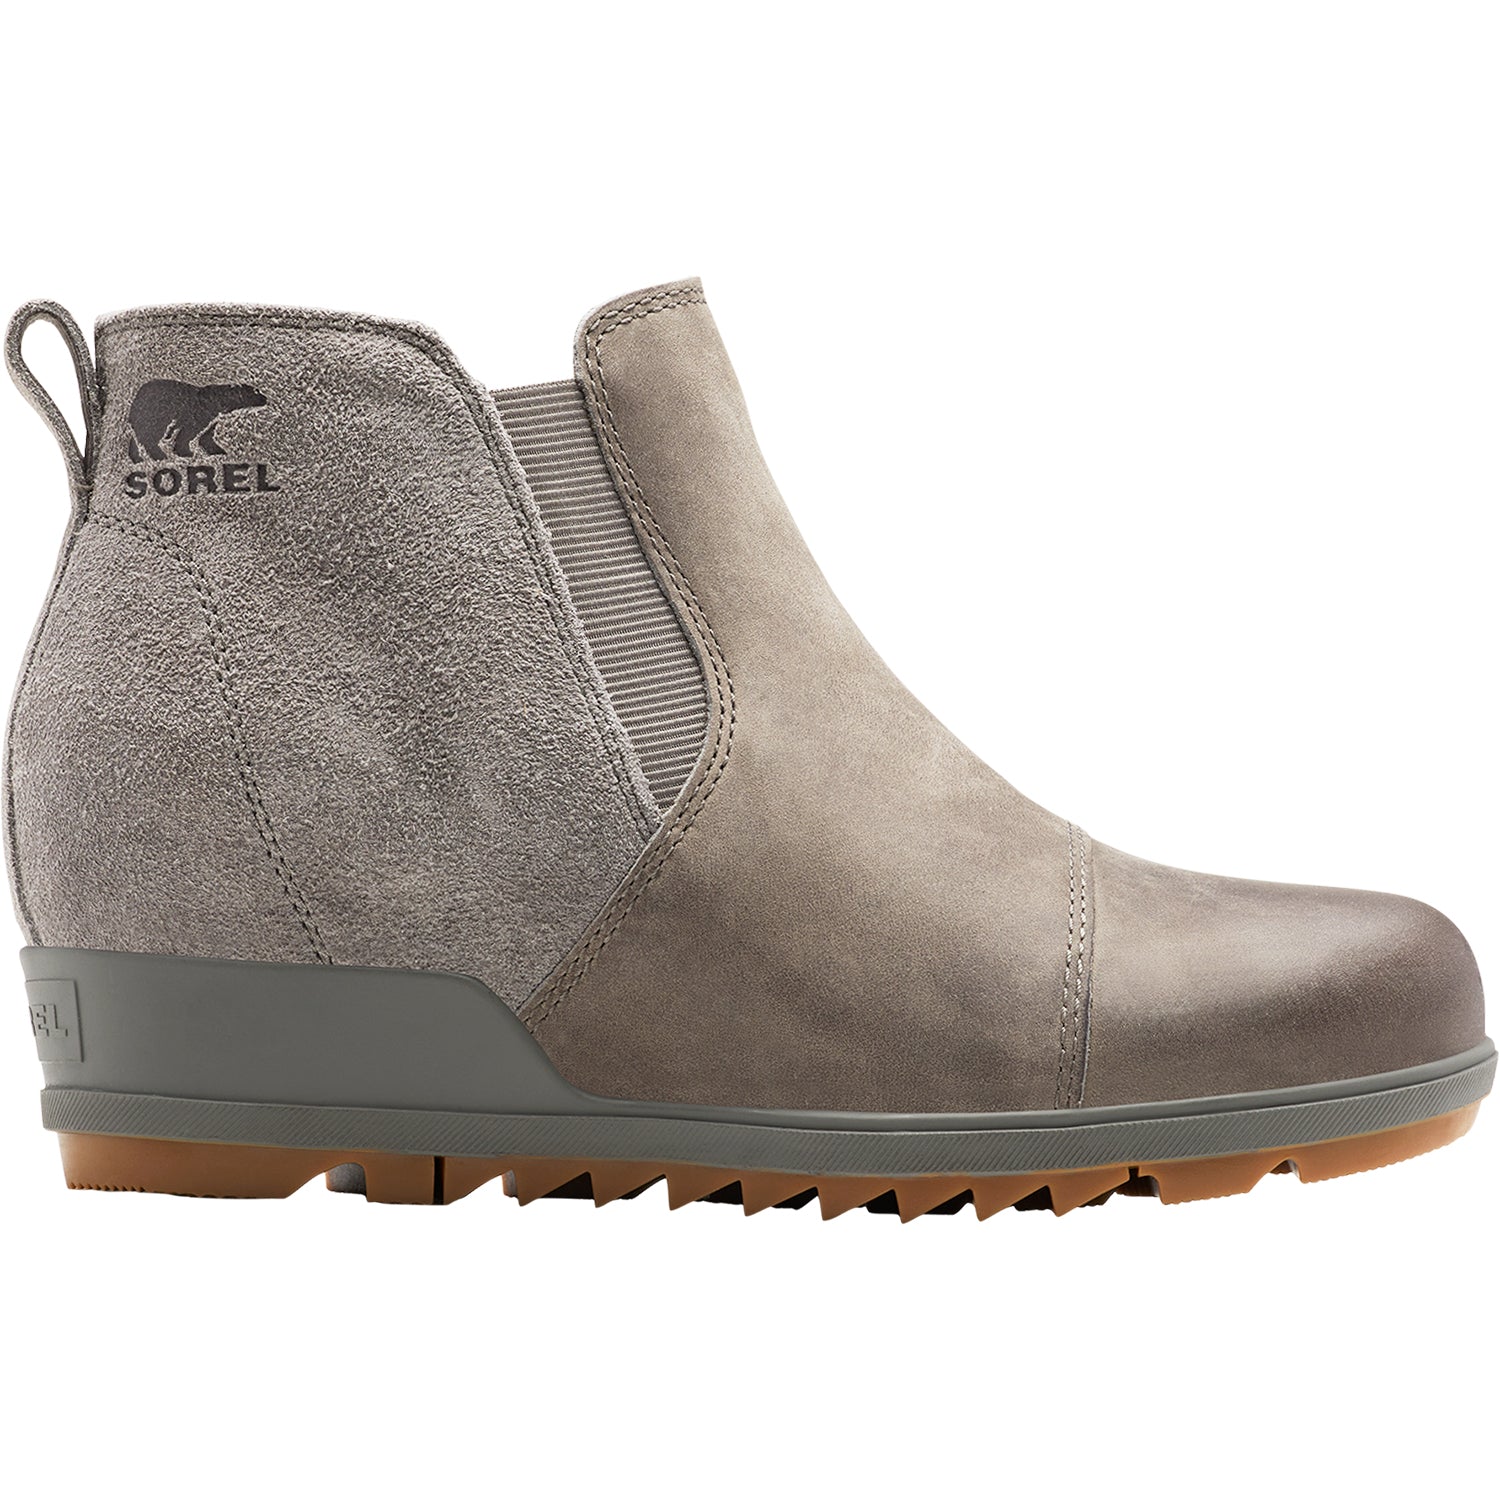 Sorel Evie Pull-On Quarry | Women's Waterproof Boots | Footwear etc.